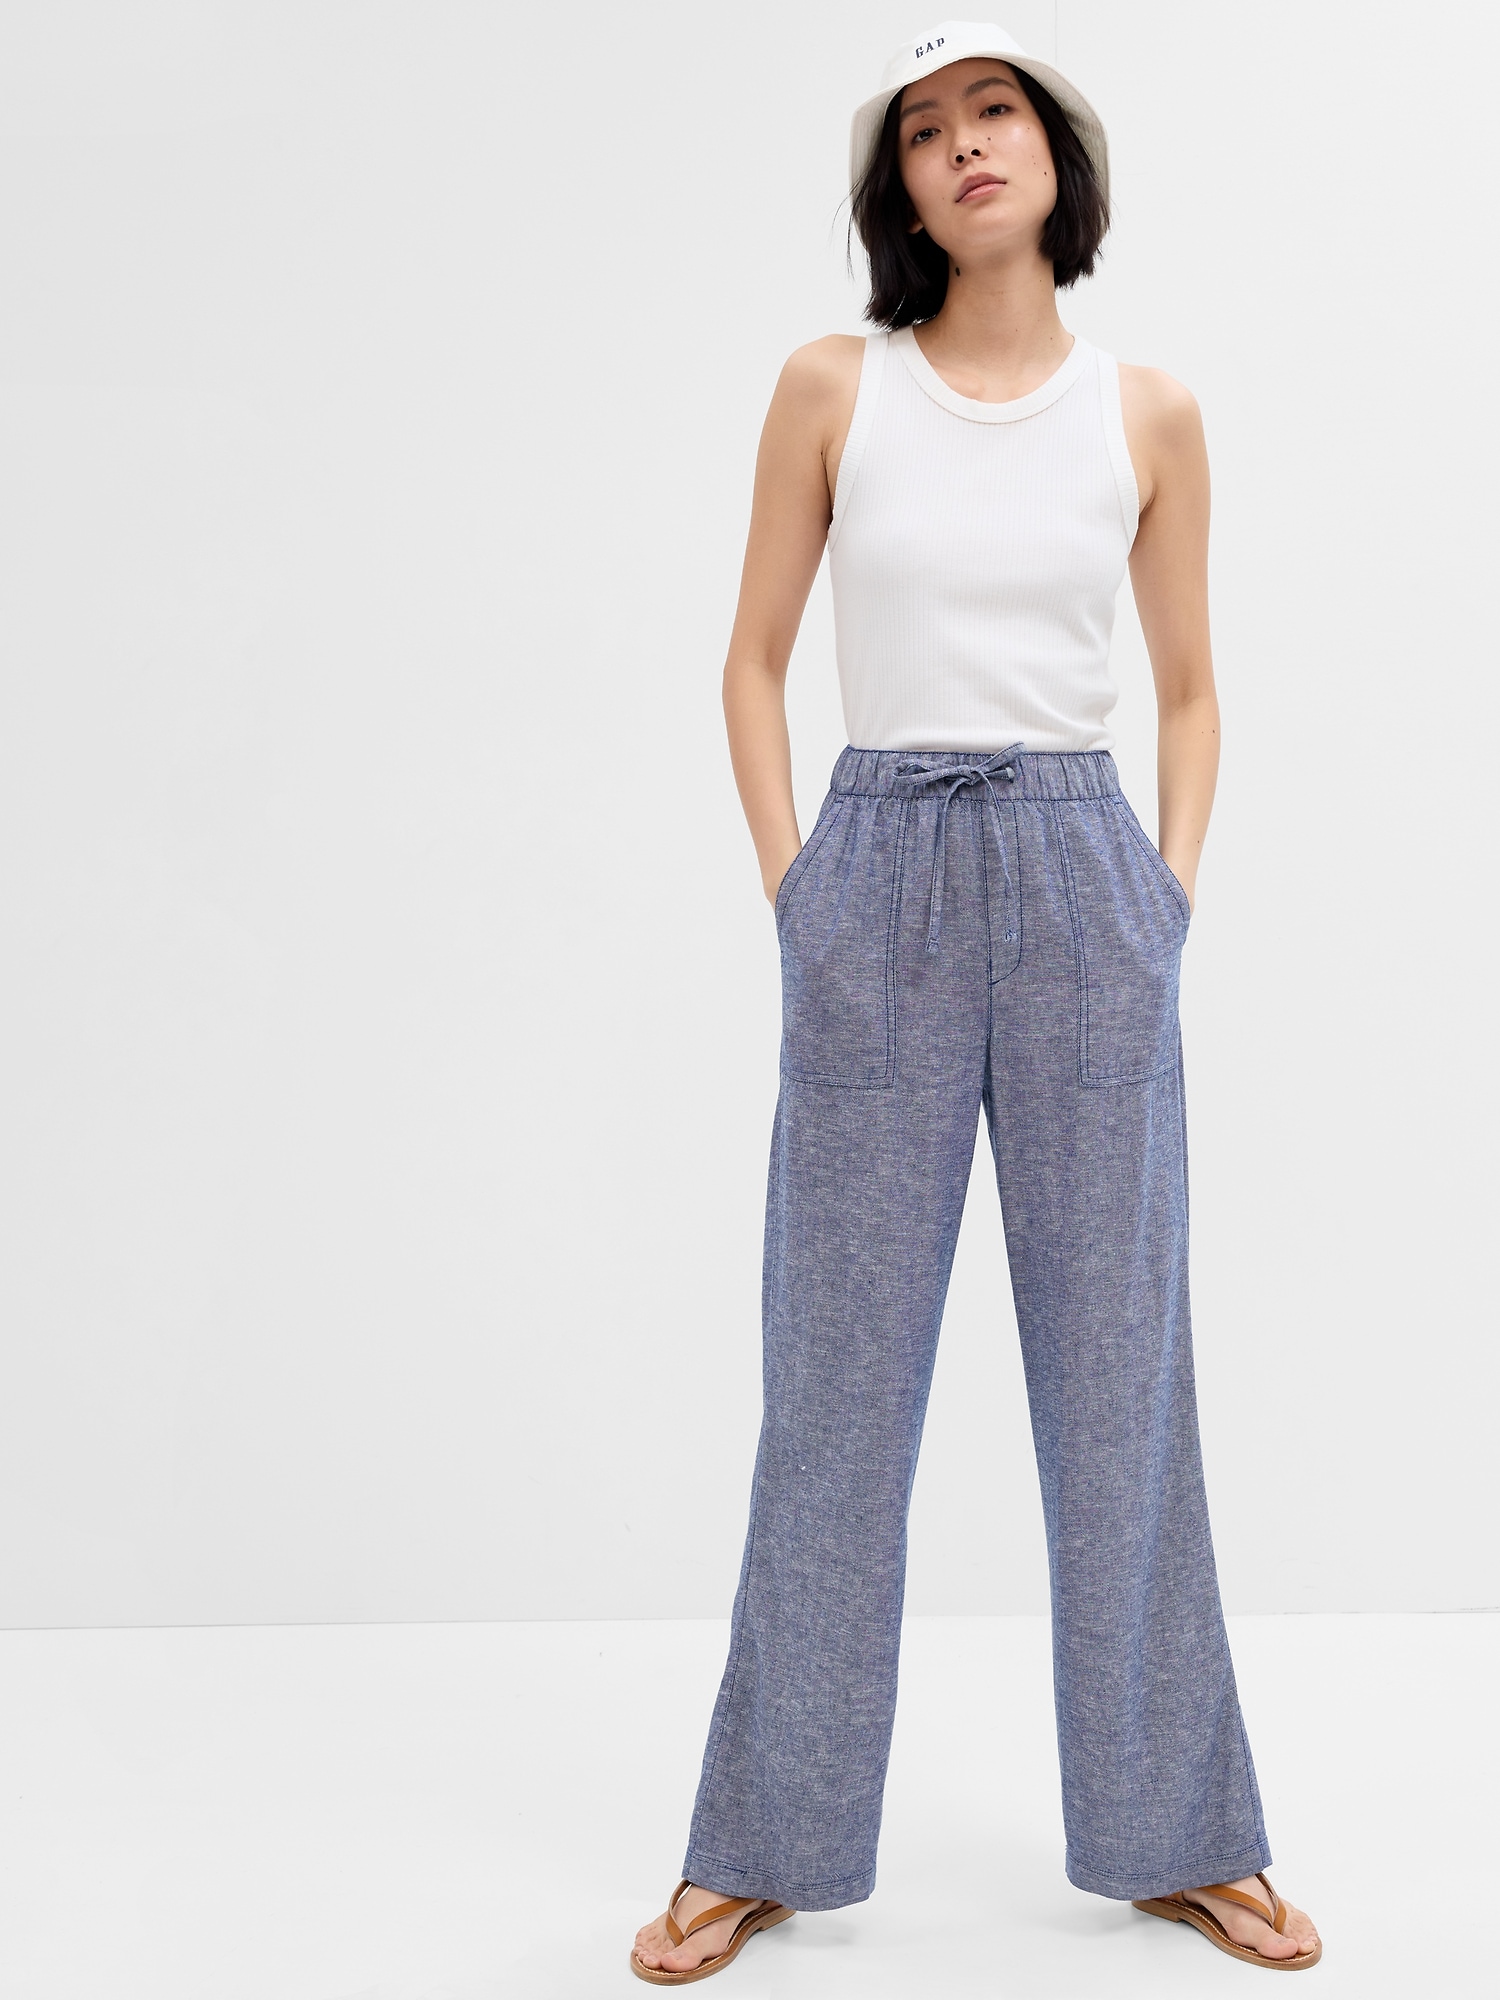 Wide-Leg Linen-Blend Pants with Washwell | Gap Factory